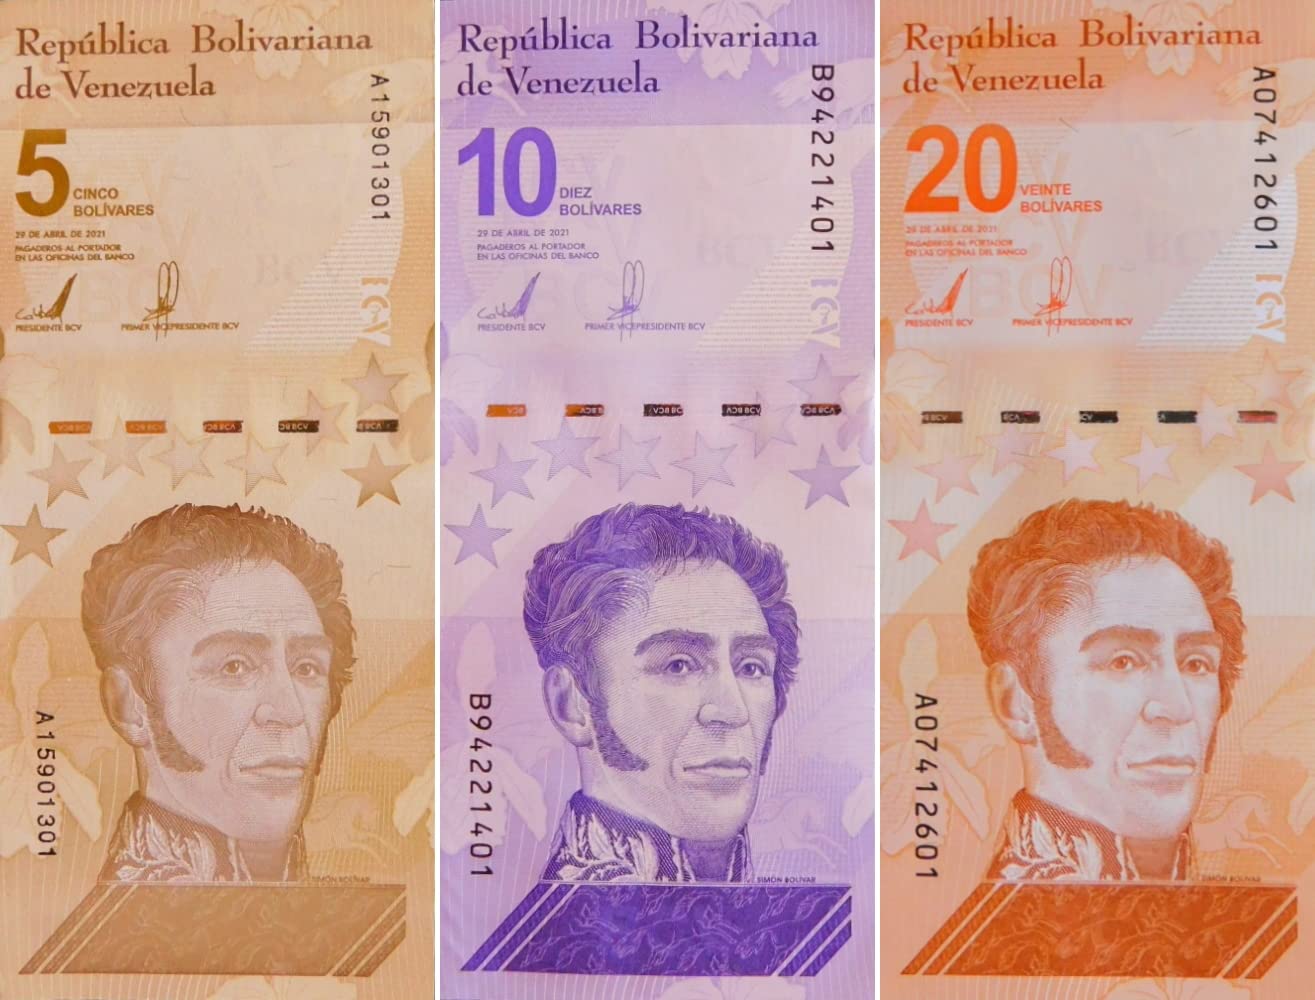 Venezuela: Currency crisis brings economy to standstill | International Bar Association